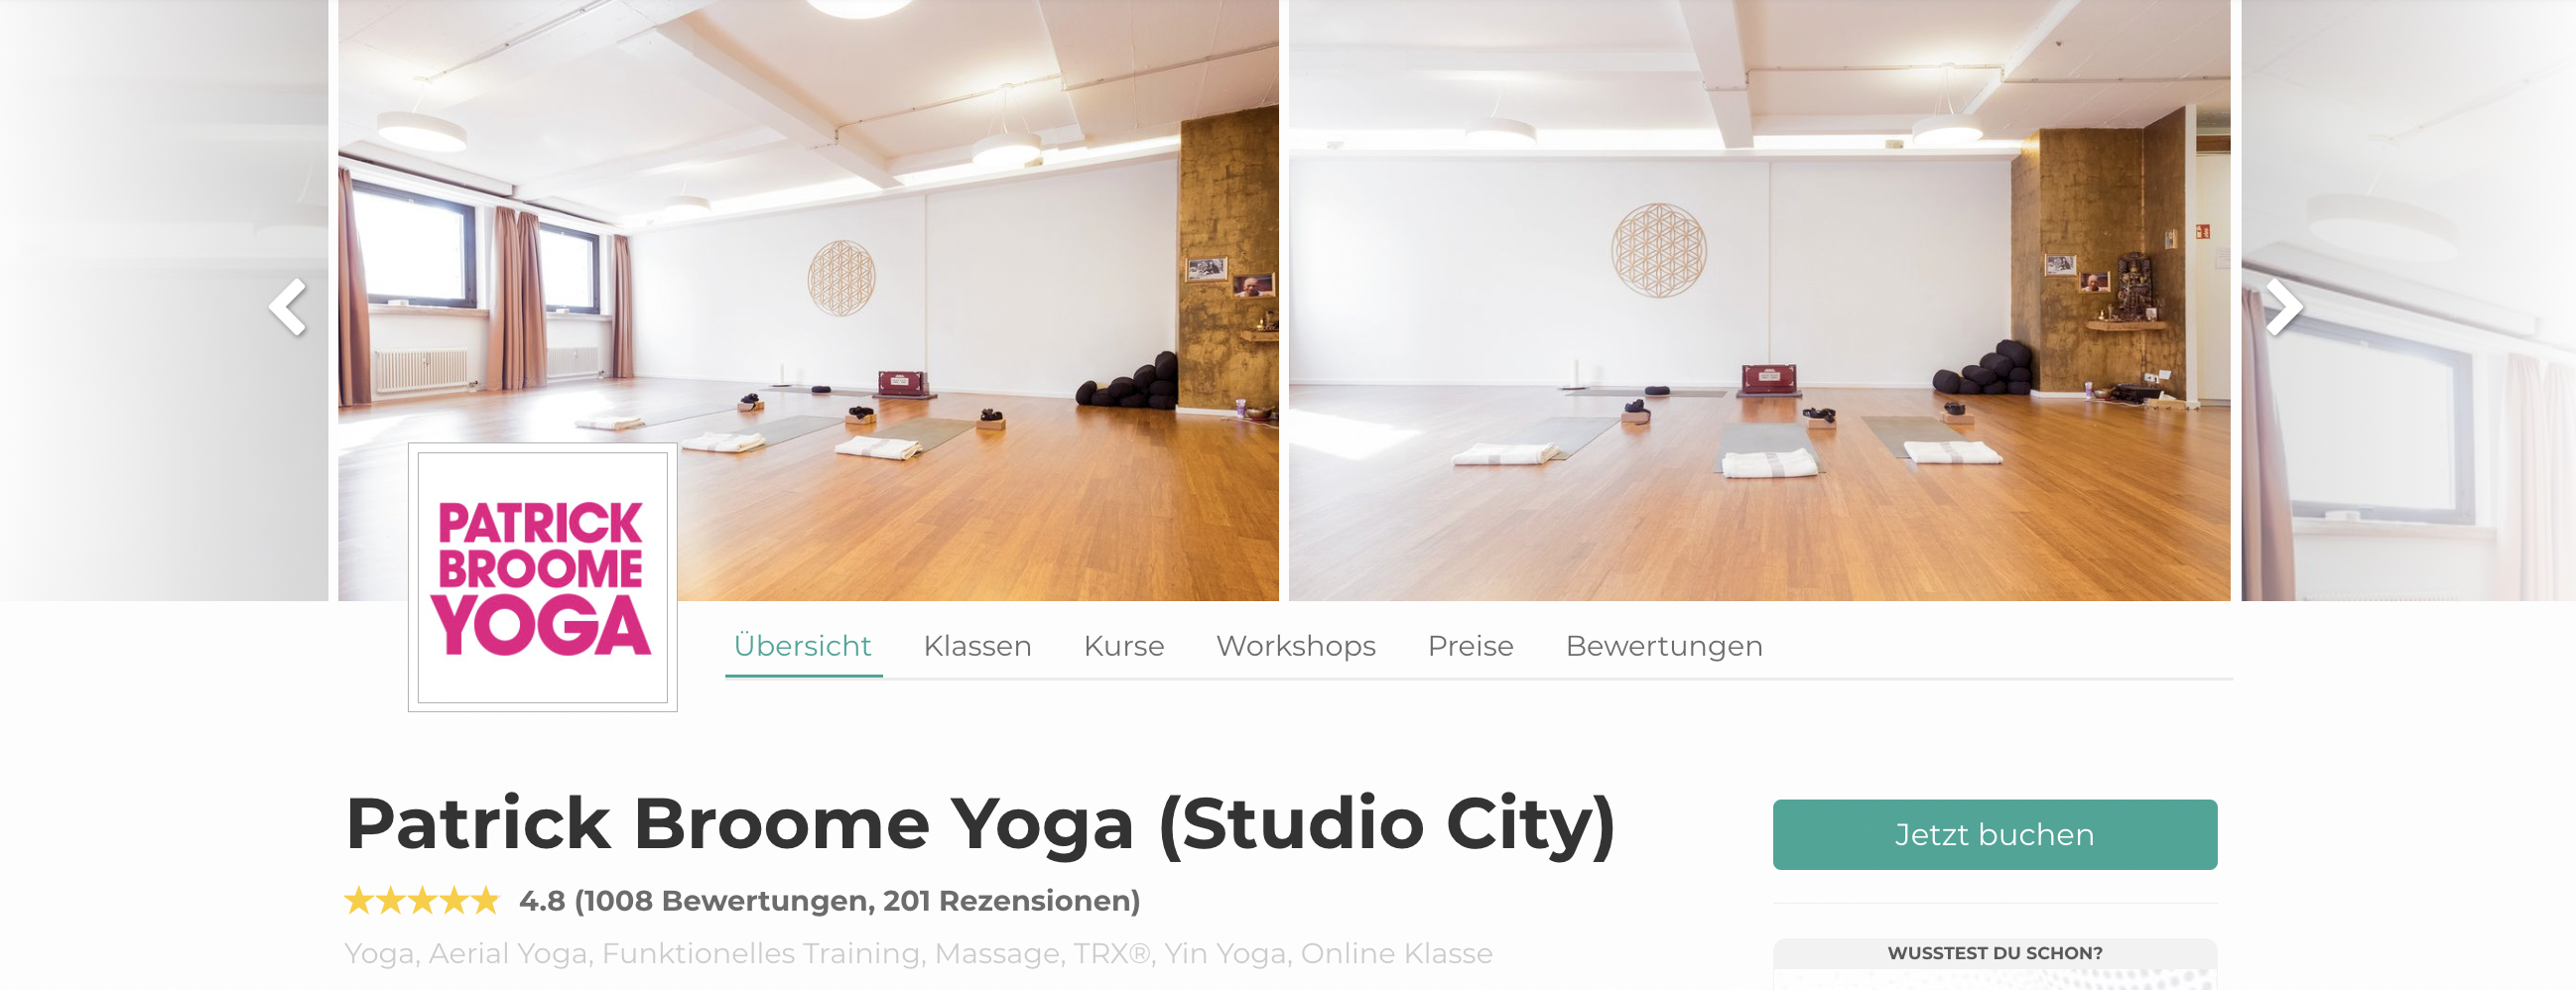 Patrick Broome ist top Yoga Studio in München